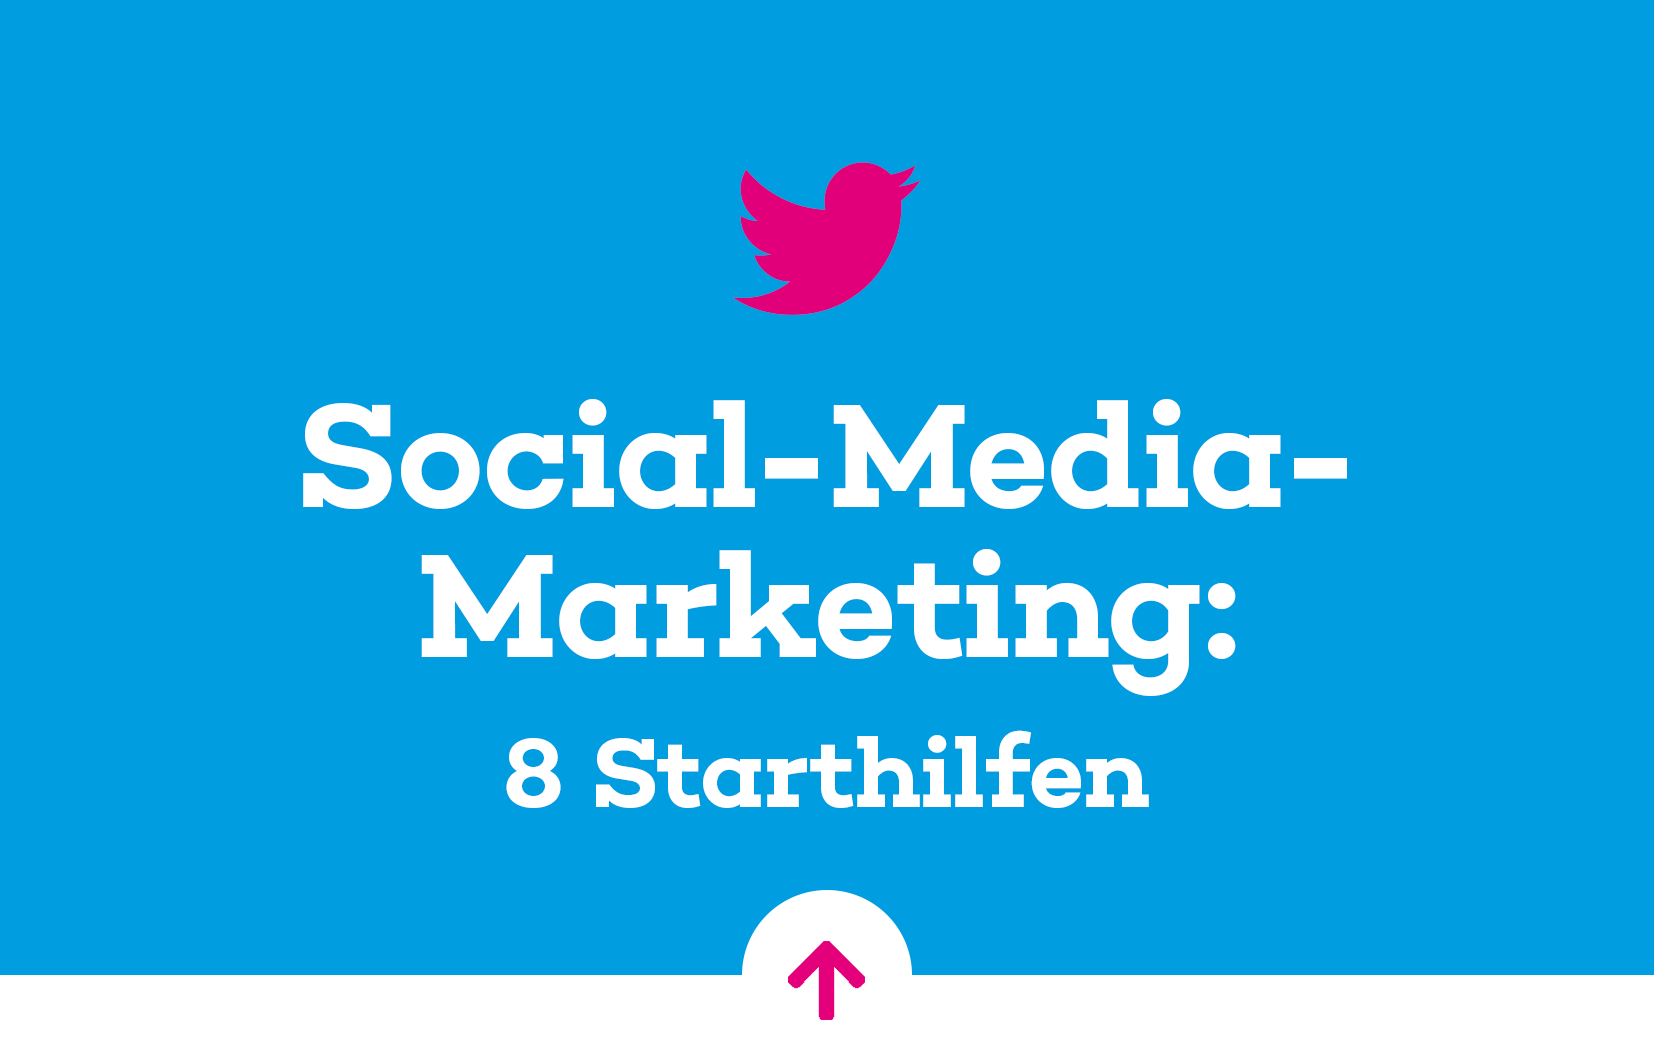 Beitragsbild “Social-Media-Marketing: 8 Starthilfen”